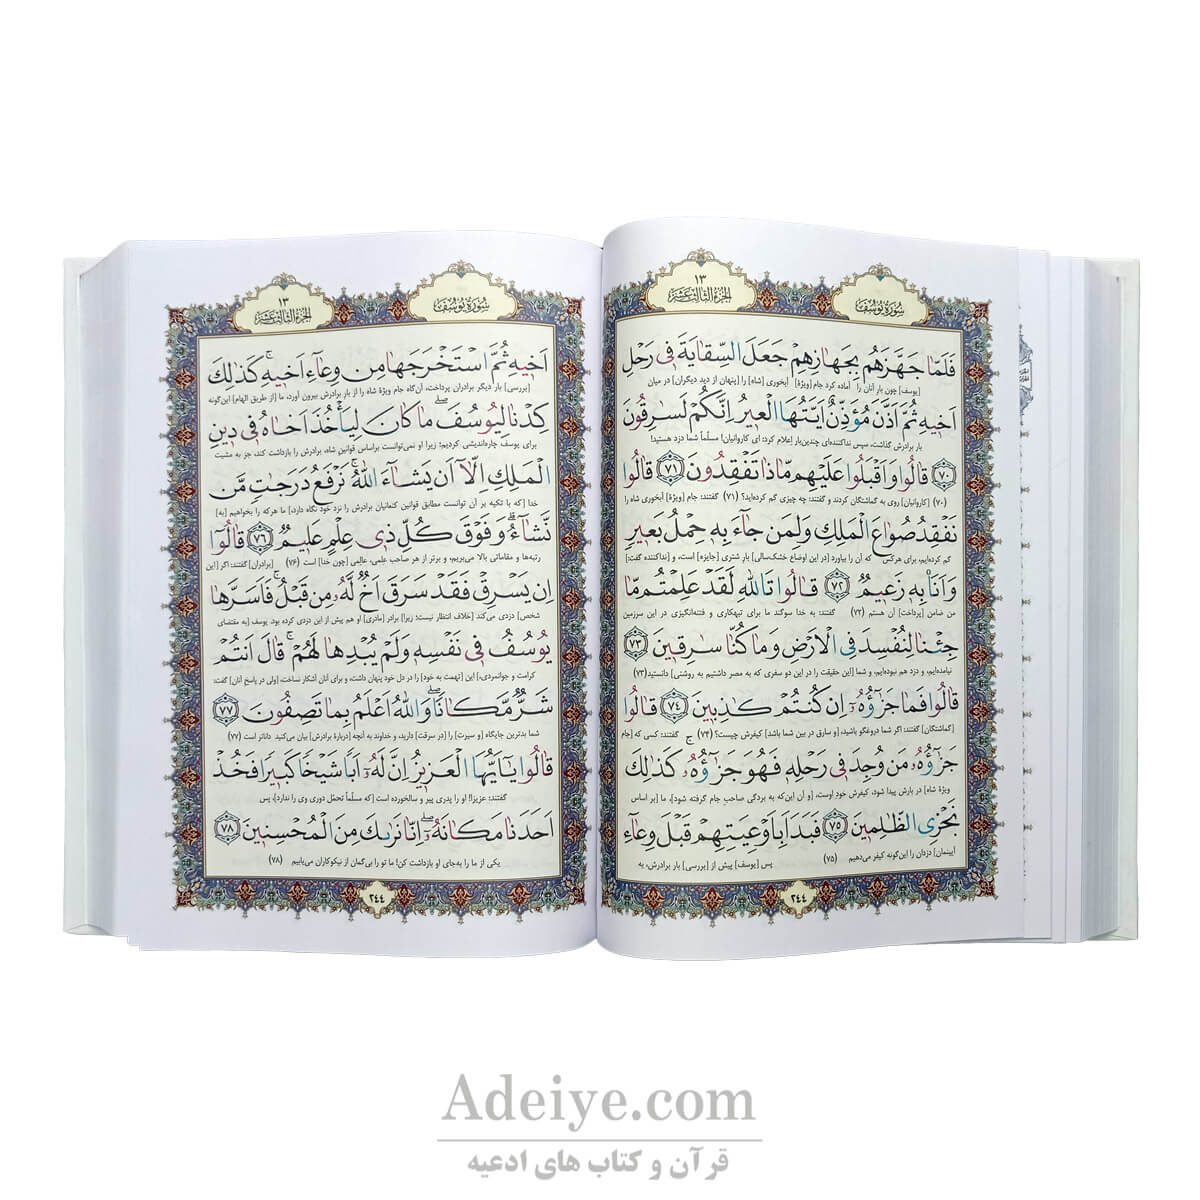 قرآن کامپیوتری نسیم با حروف رنگی عکس متن